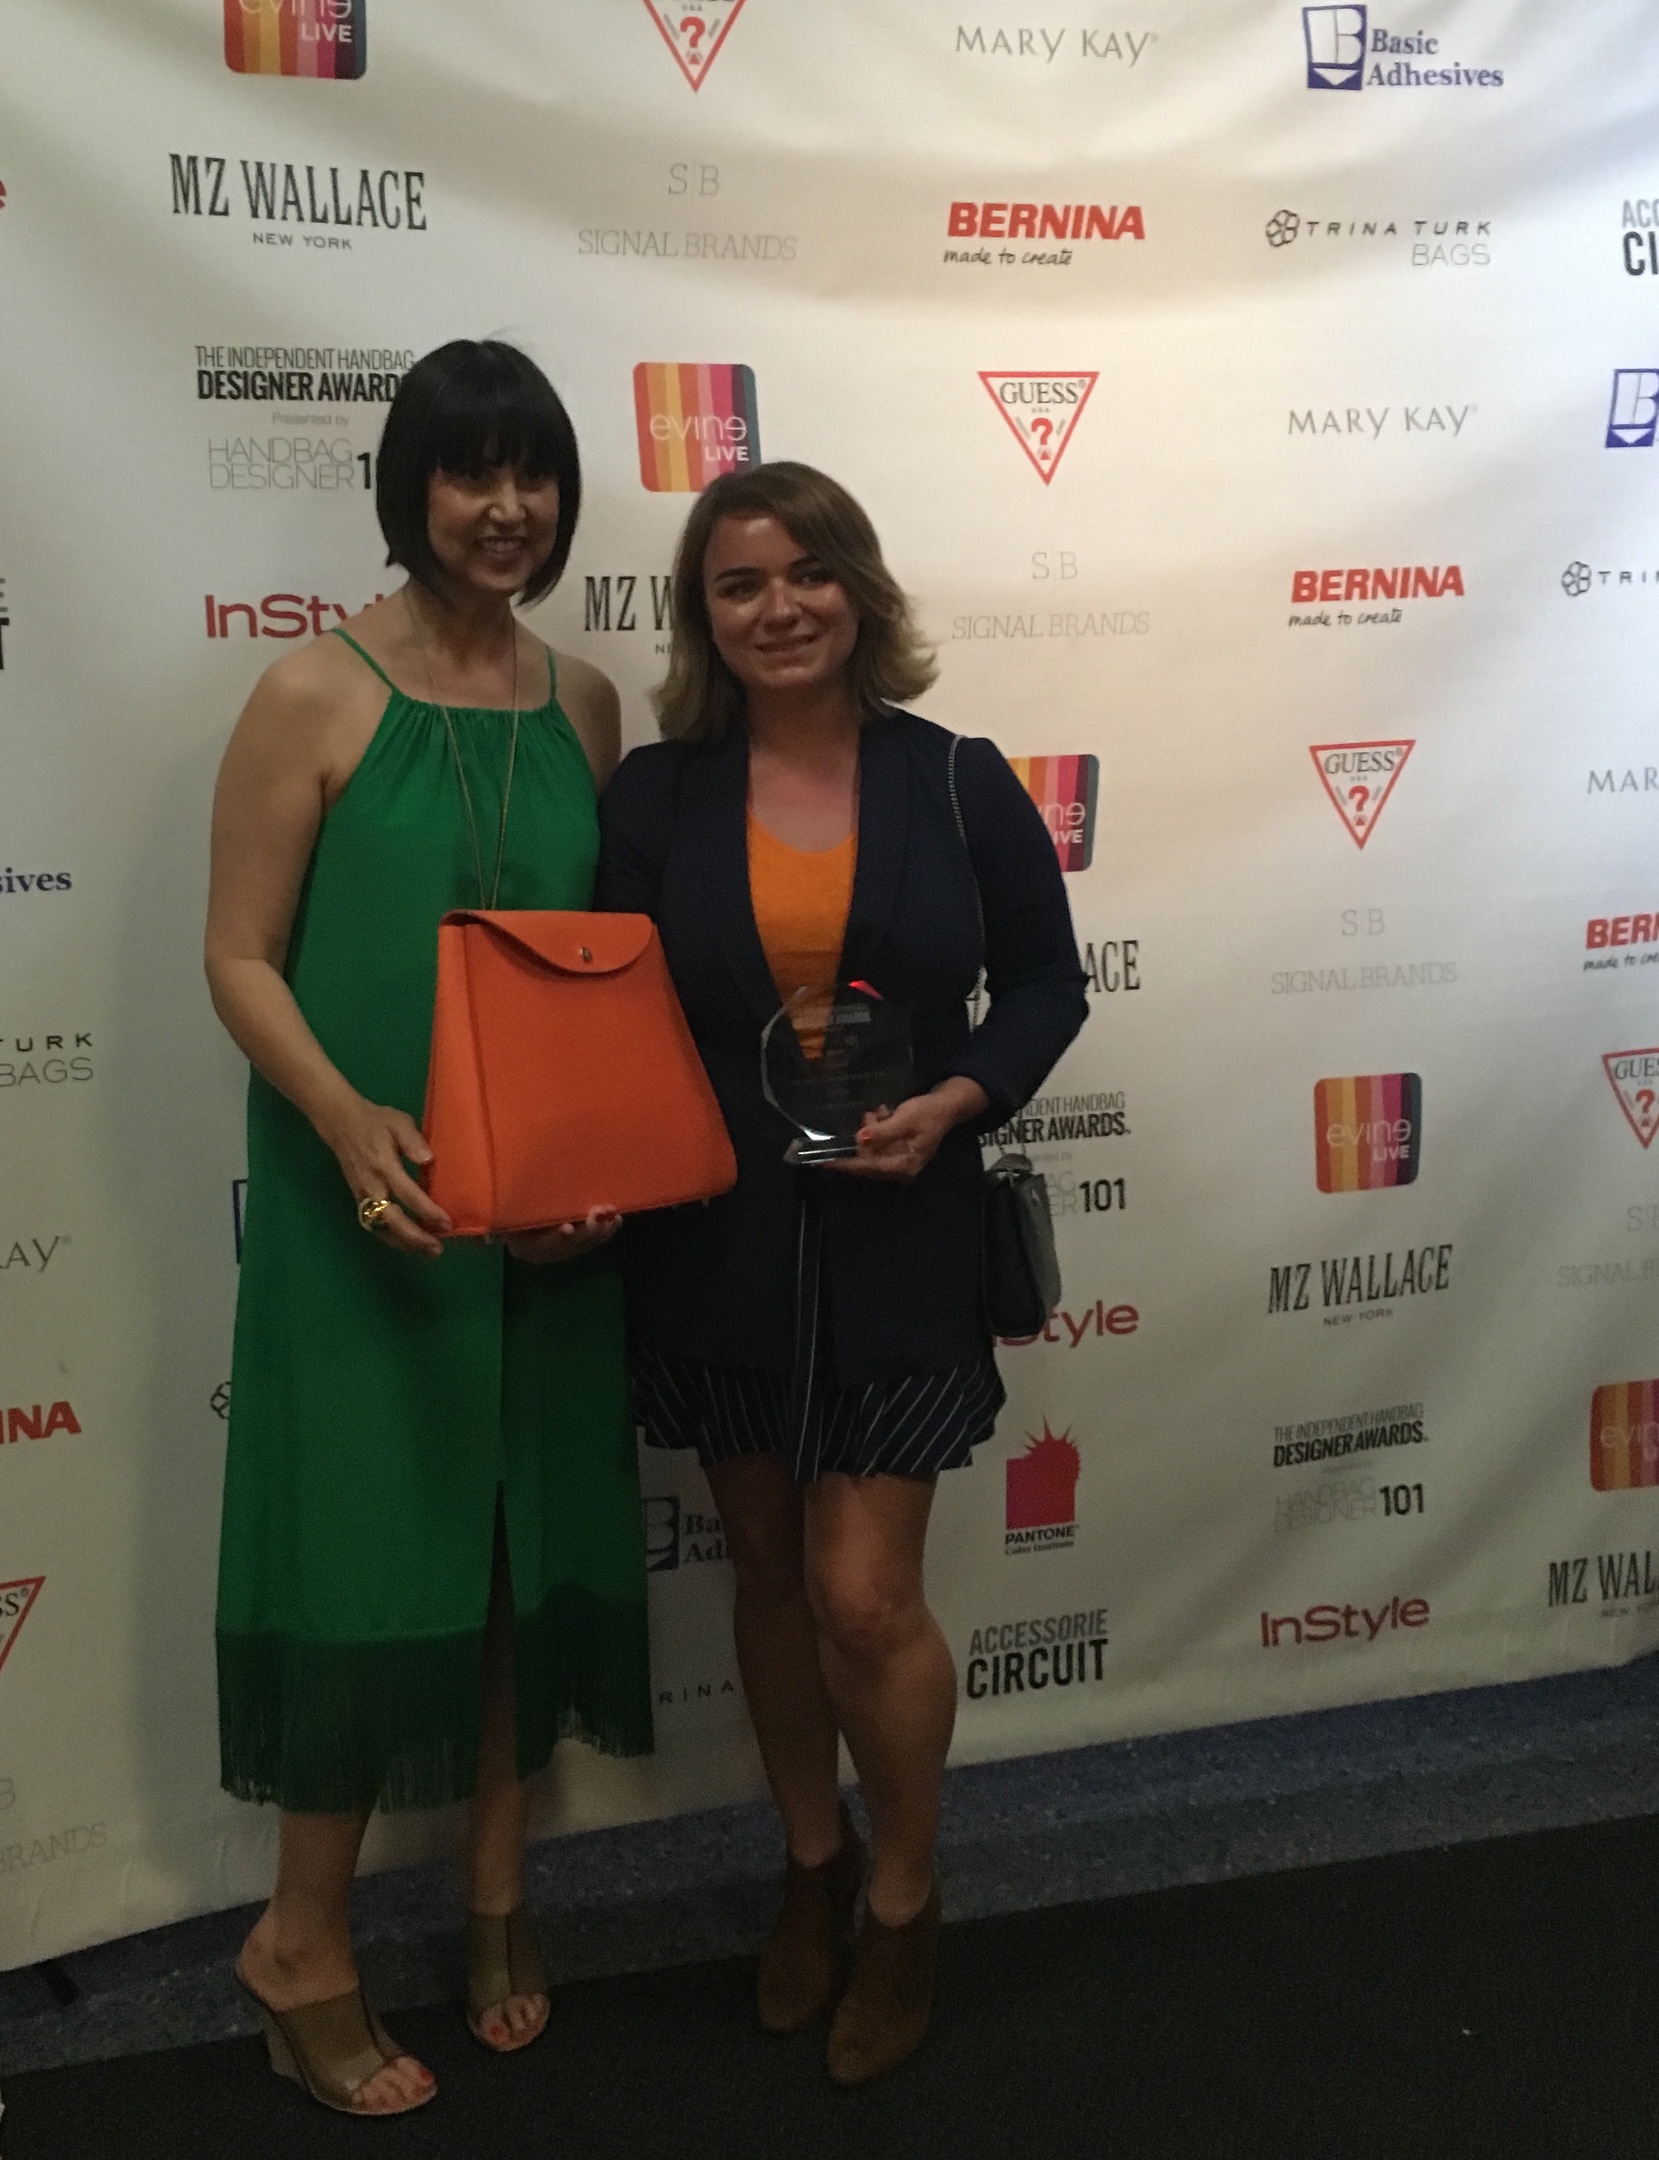 Cathleen Nicol won the Best Resort Bag category